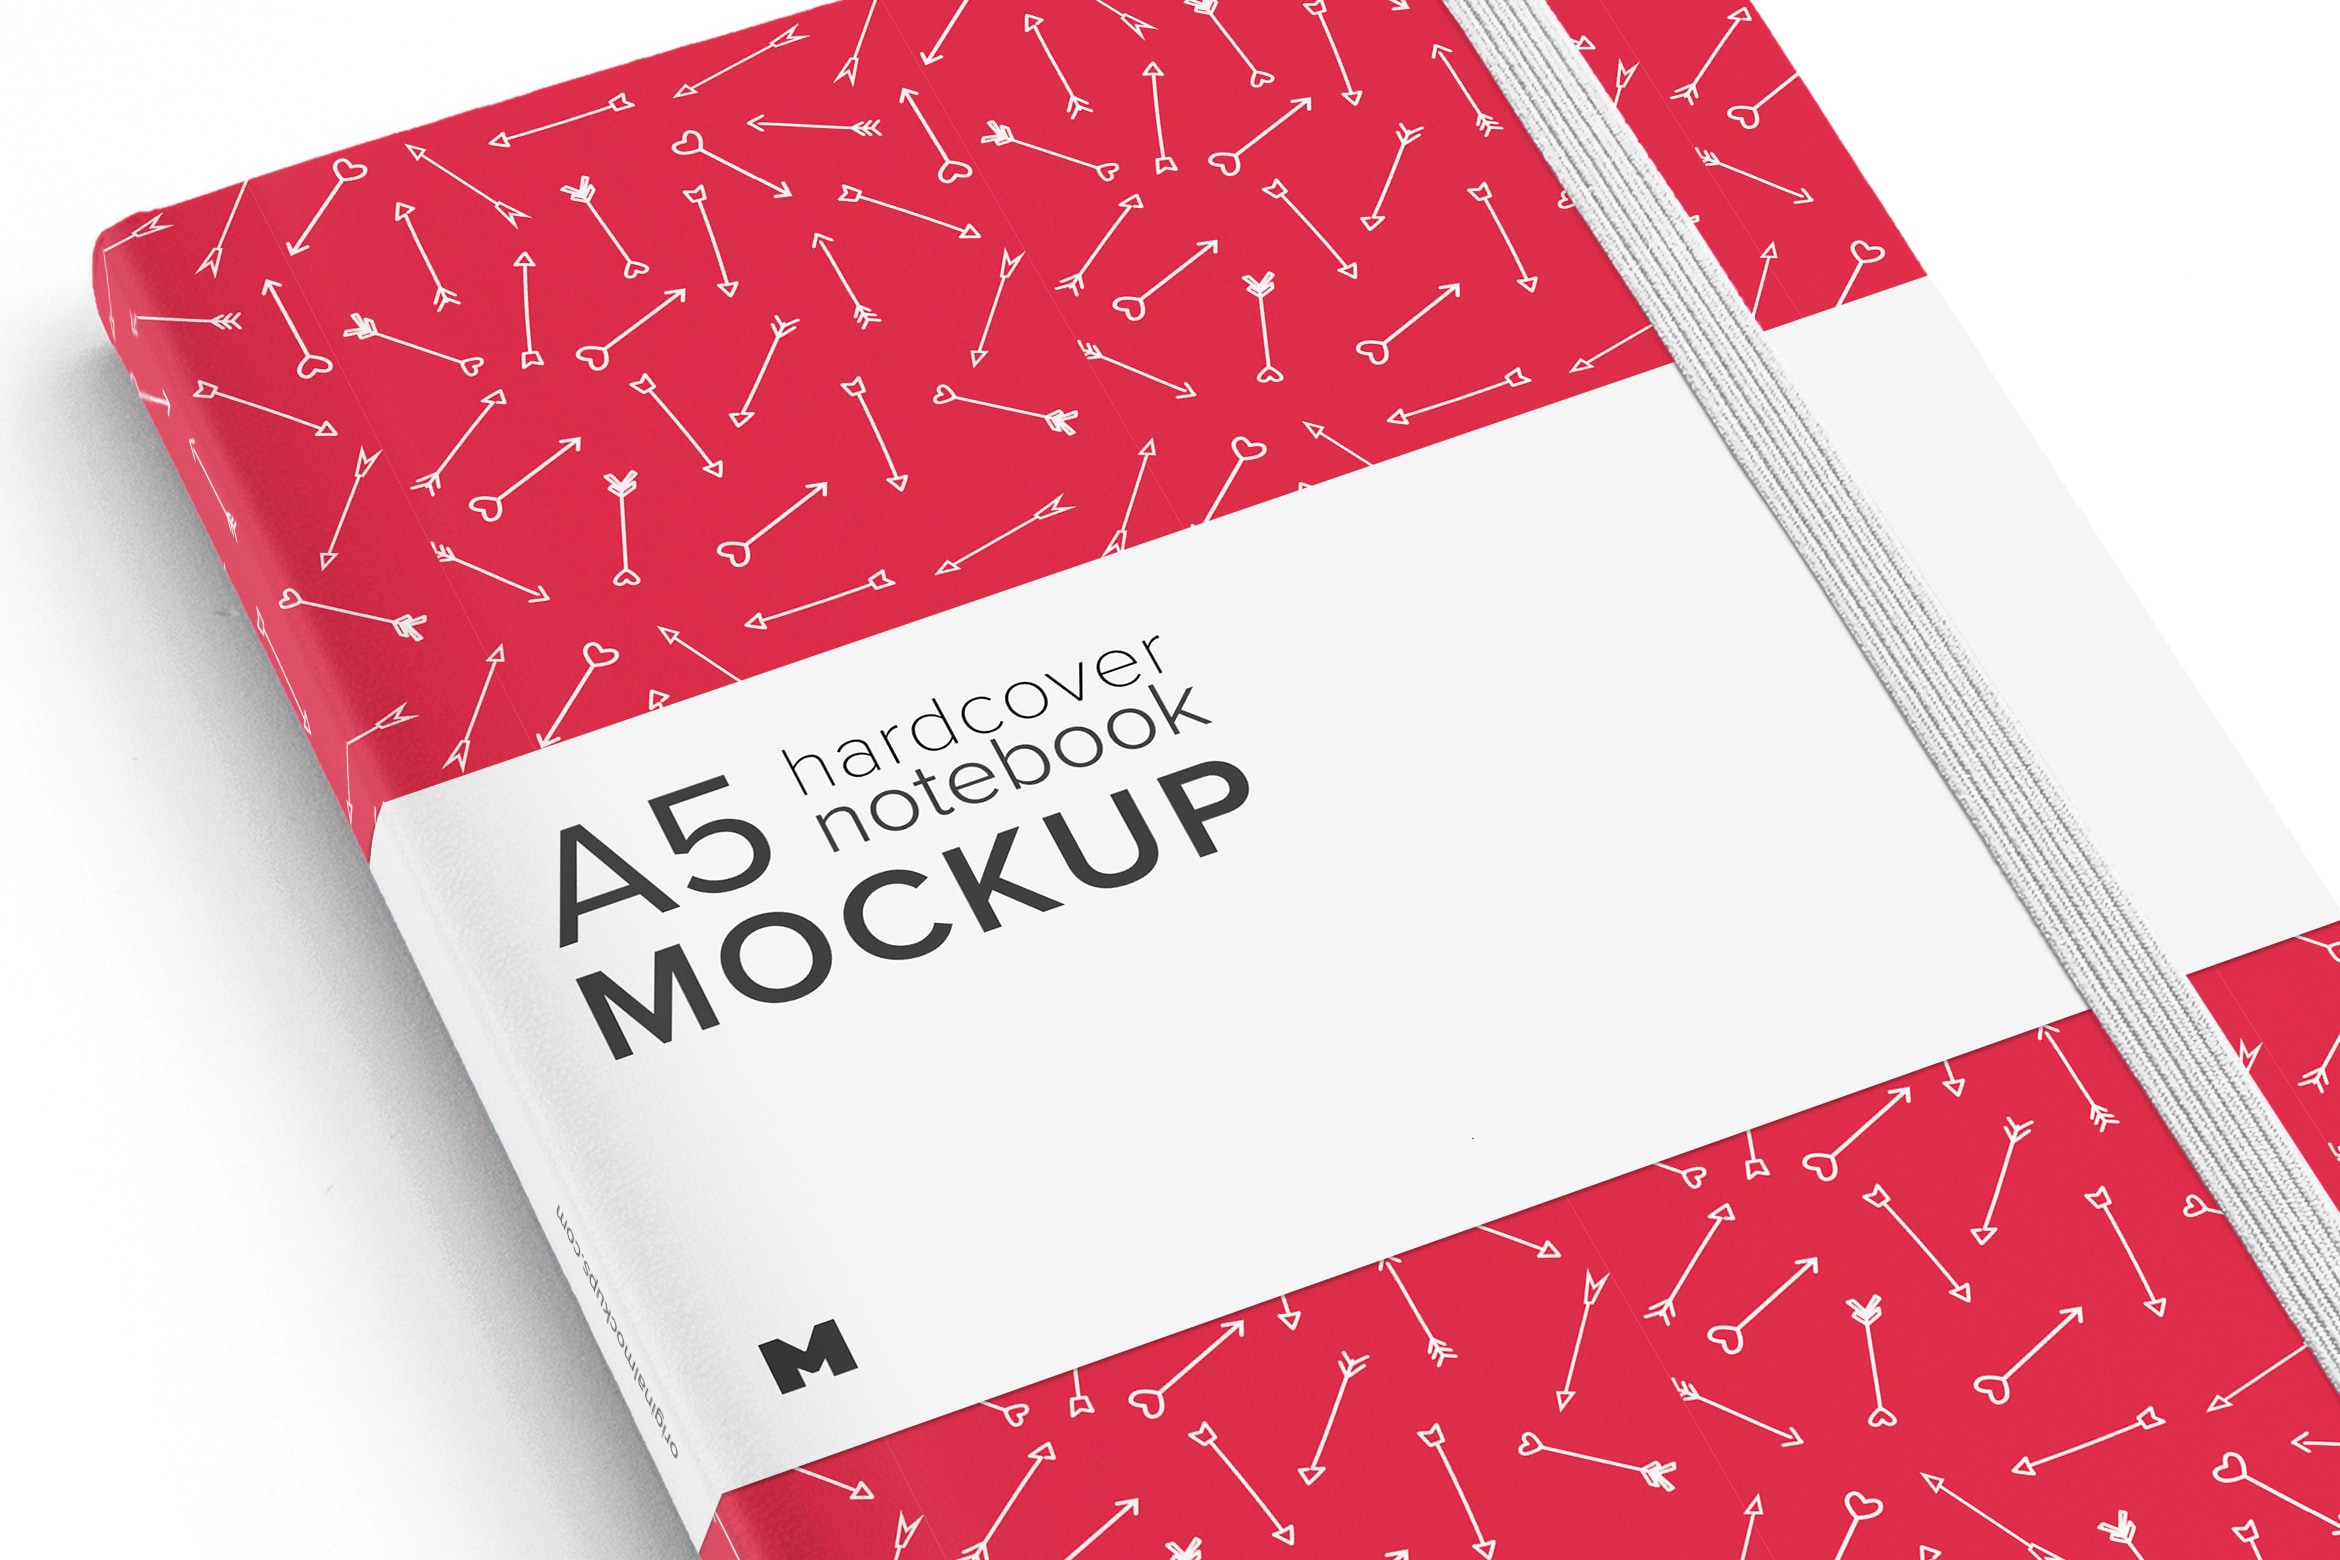 A5精装笔记本/记事本外观设计样机模板01 A5 Hardcover Notebook Mockup 01插图(1)